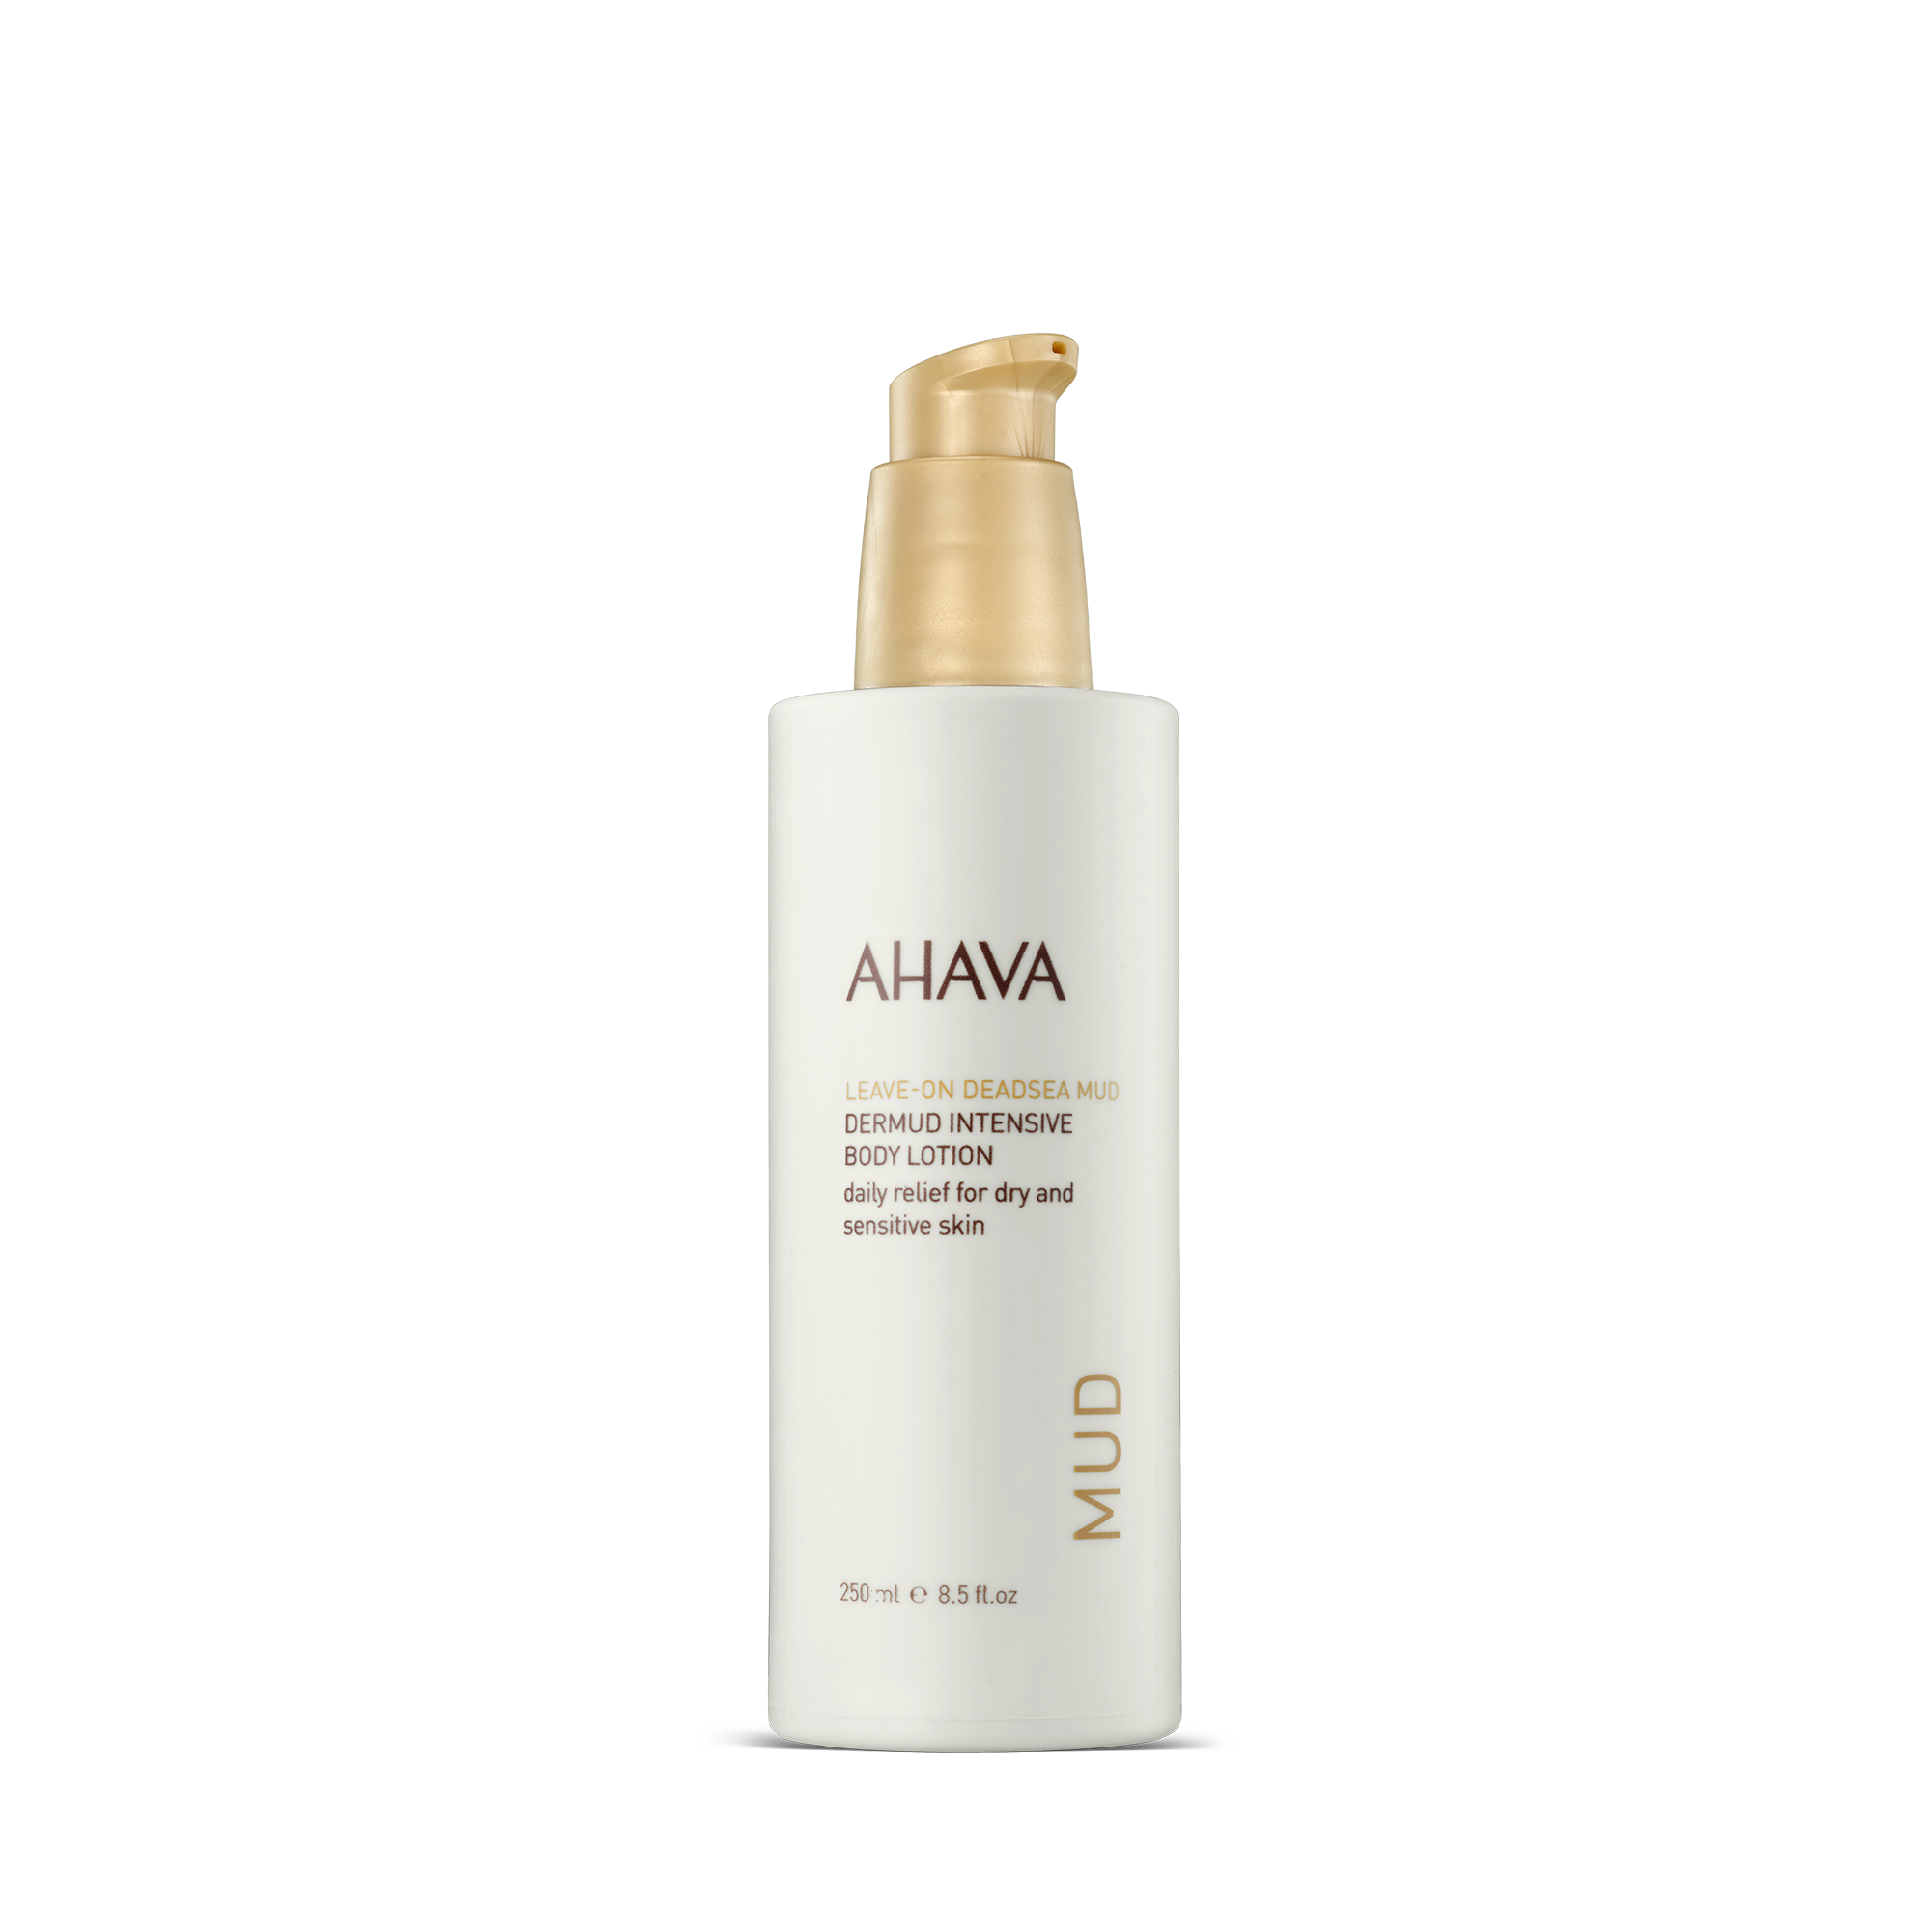 AHAVA® Dermud Intensive Dead Lotion Global – Mud Sea Body AHAVA